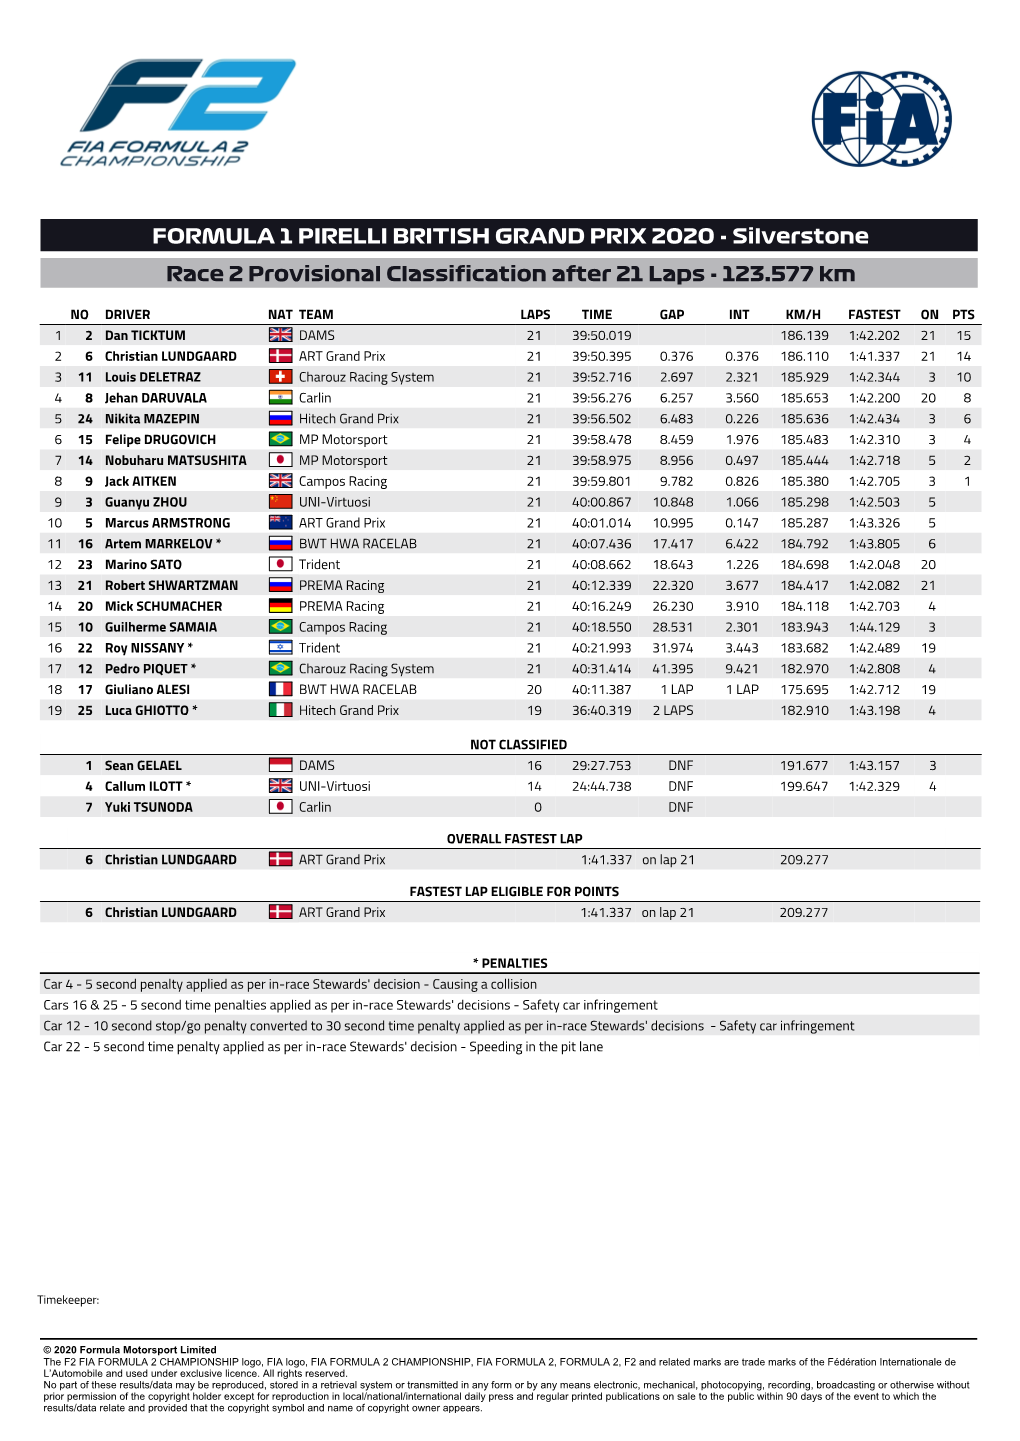 FORMULA 1 PIRELLI BRITISH GRAND PRIX 2020 - Silverstone Race 2 Provisional Classification After 21 Laps - 123.577 Km